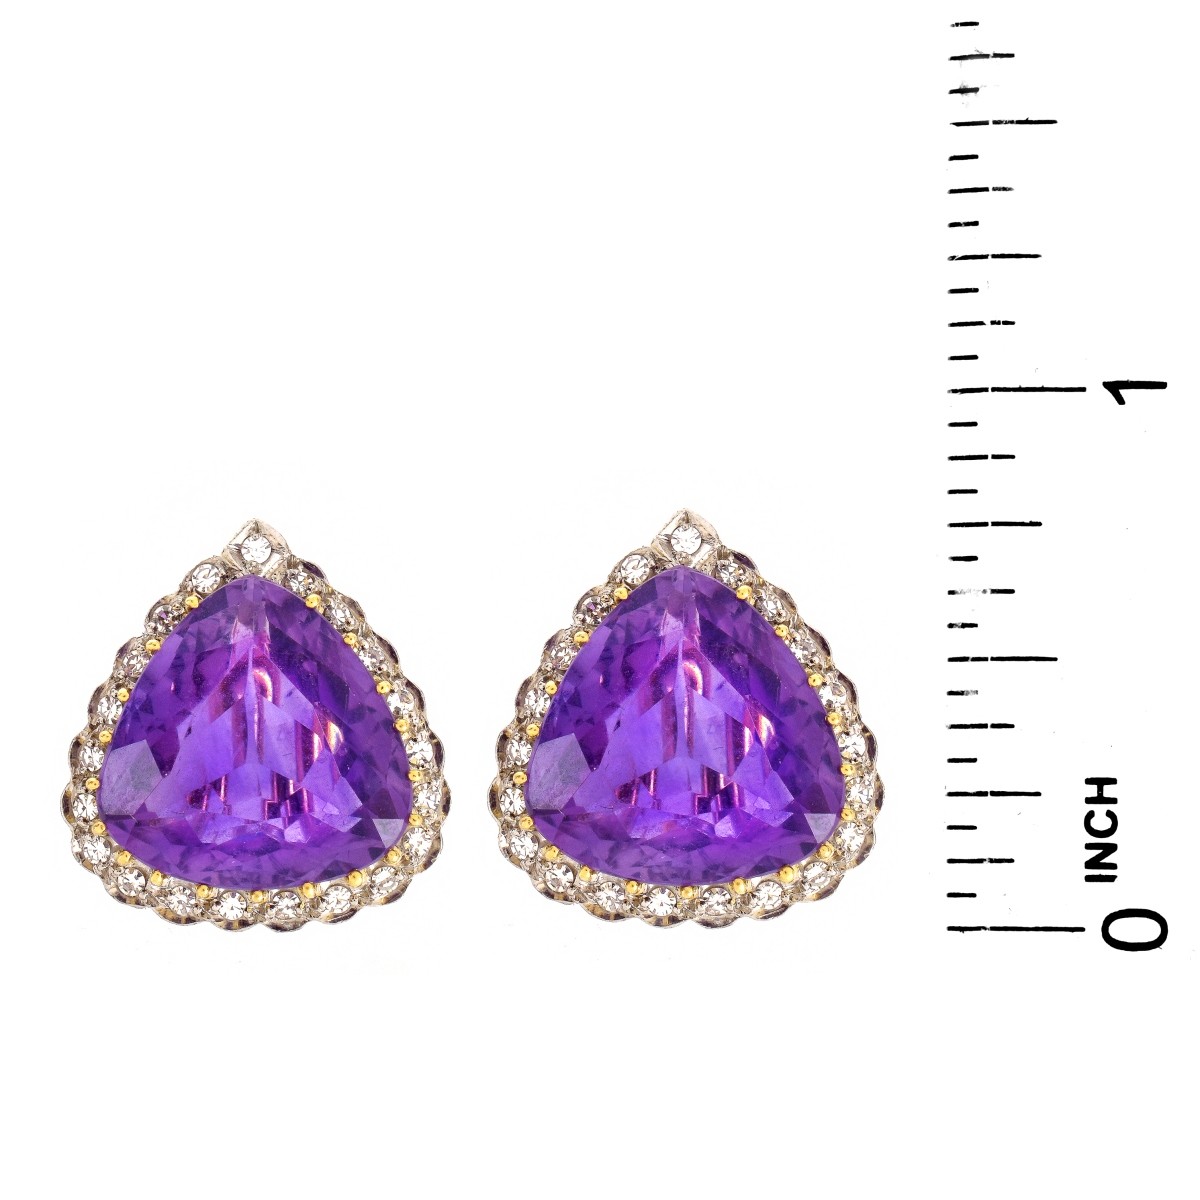 H Stern Amethyst, Diamond and 18K Earrings